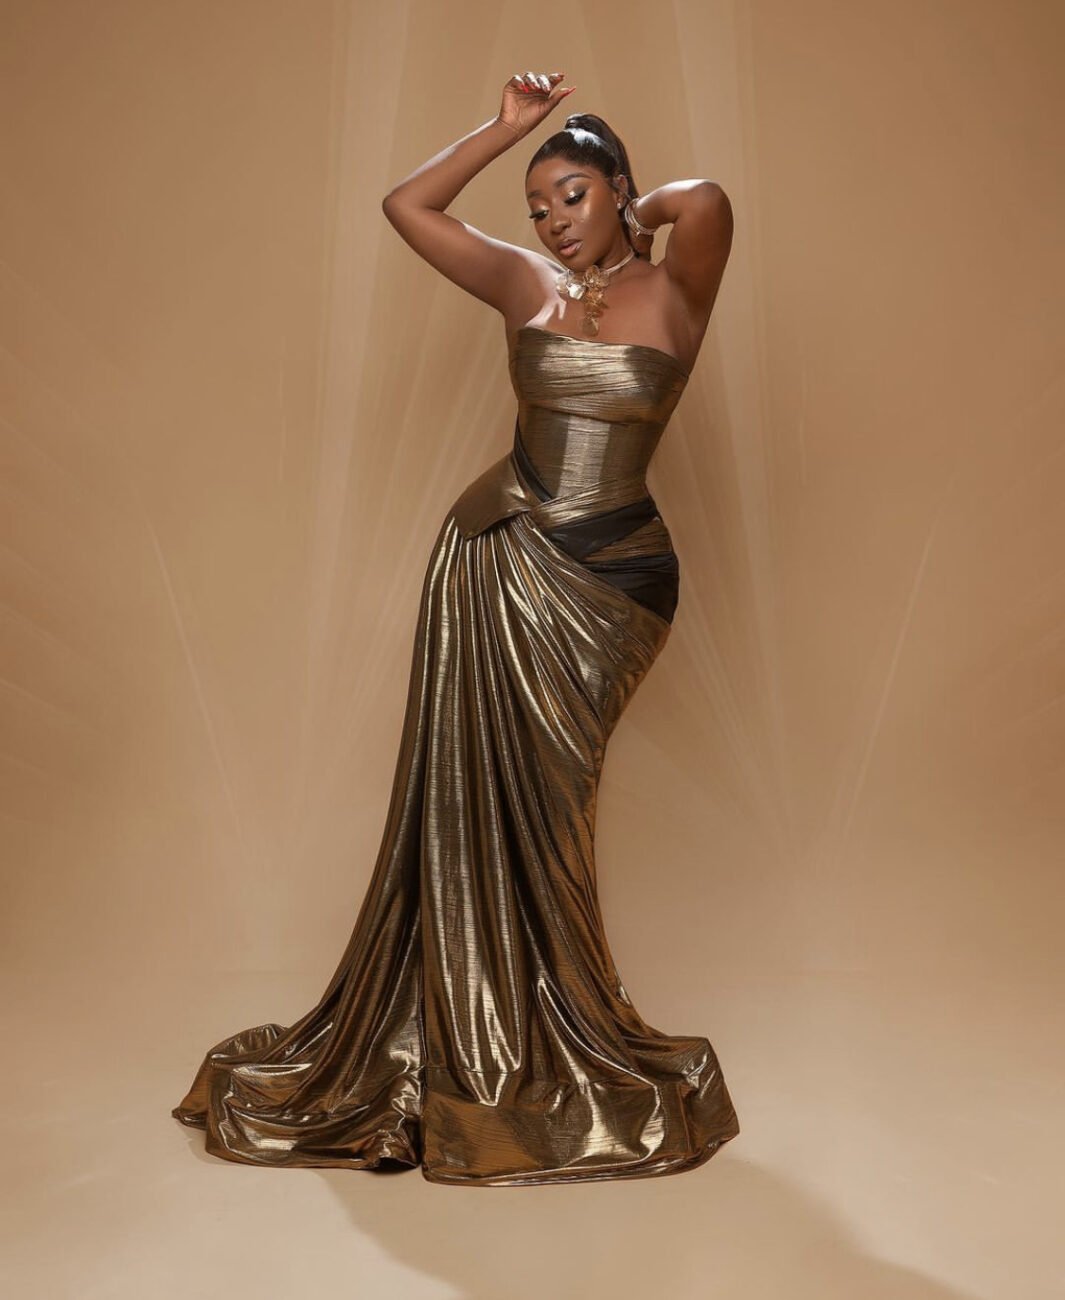 Ini Edo in a sleeveless bronze dress that matches her skin tone.